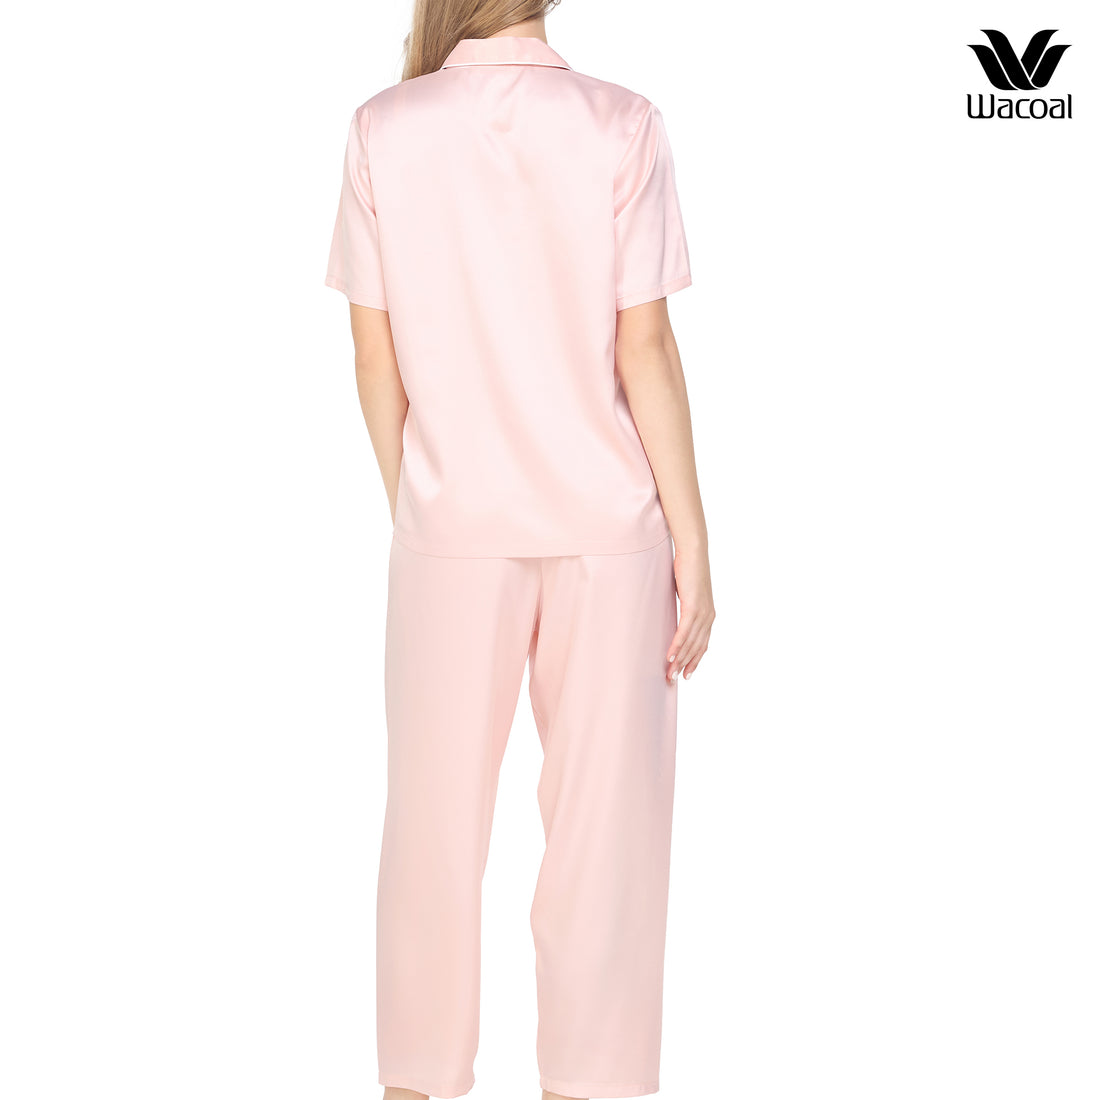 Wacoal Sleep Wear ชุดนอนผ้า Satin Set แขนสั้น ขายาว รุ่น WN7E18 สีชมพูอ่อน  (LC)